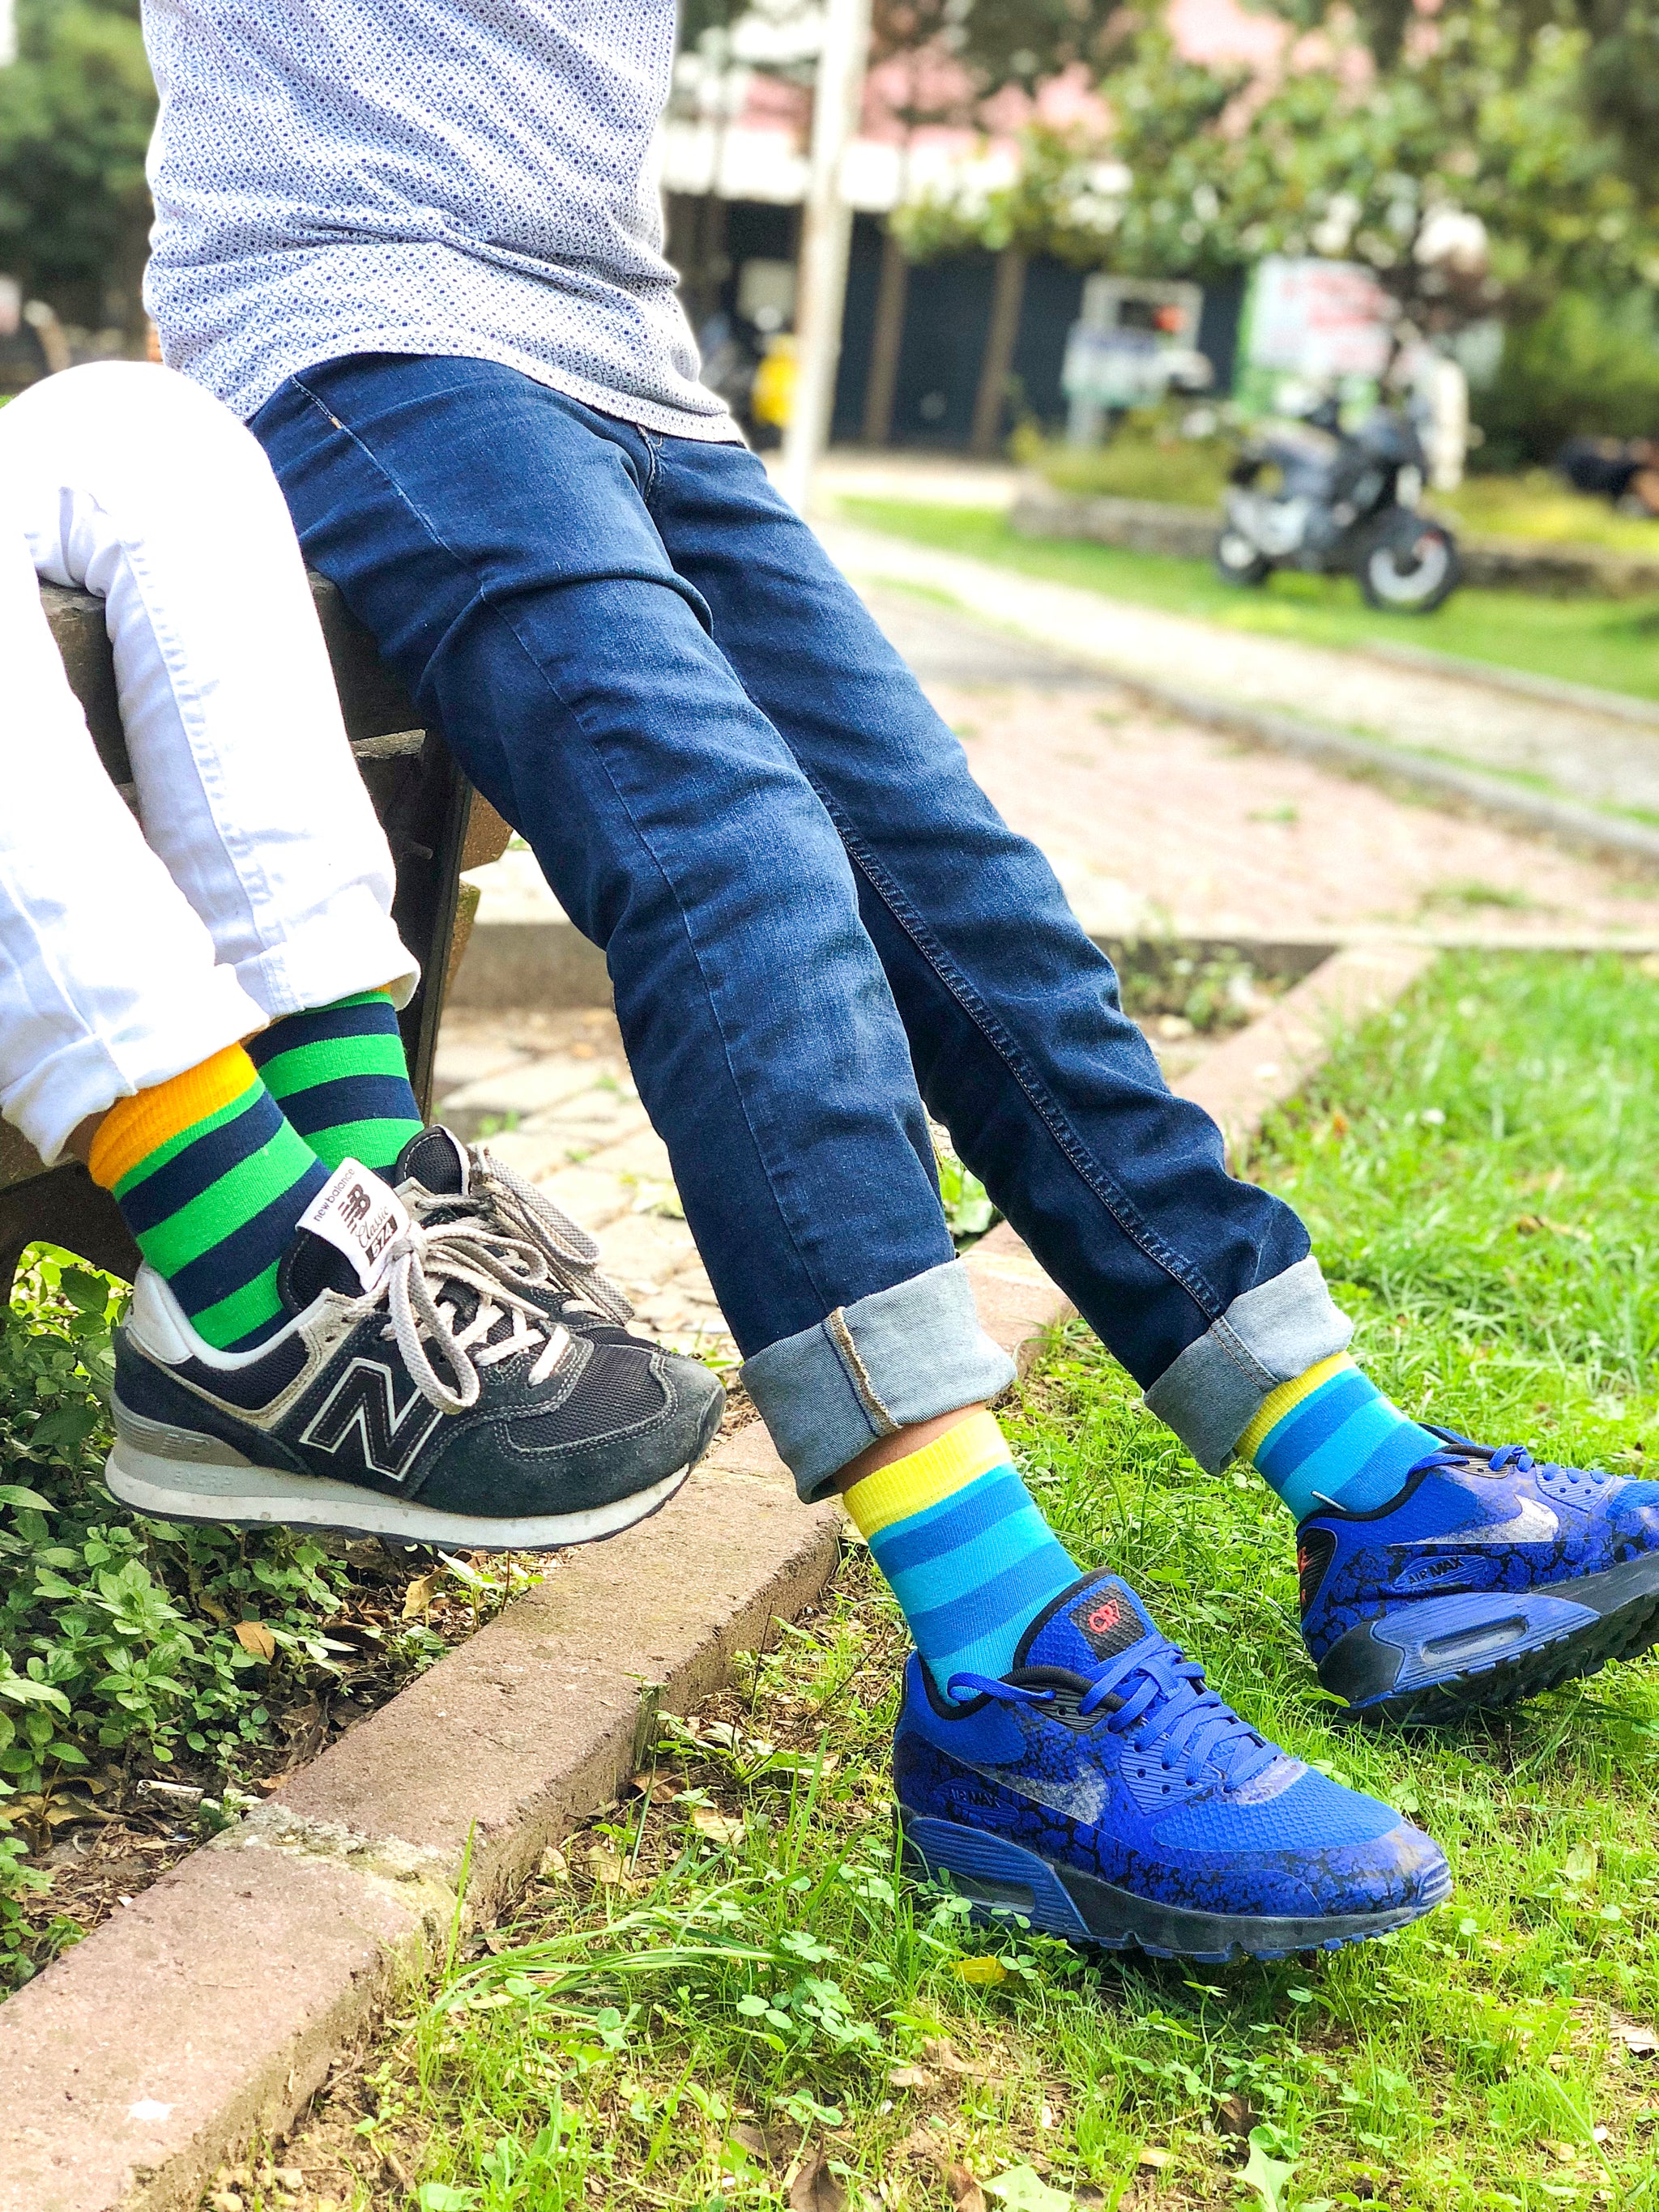 Kids Yellow Sky Stripe Socks